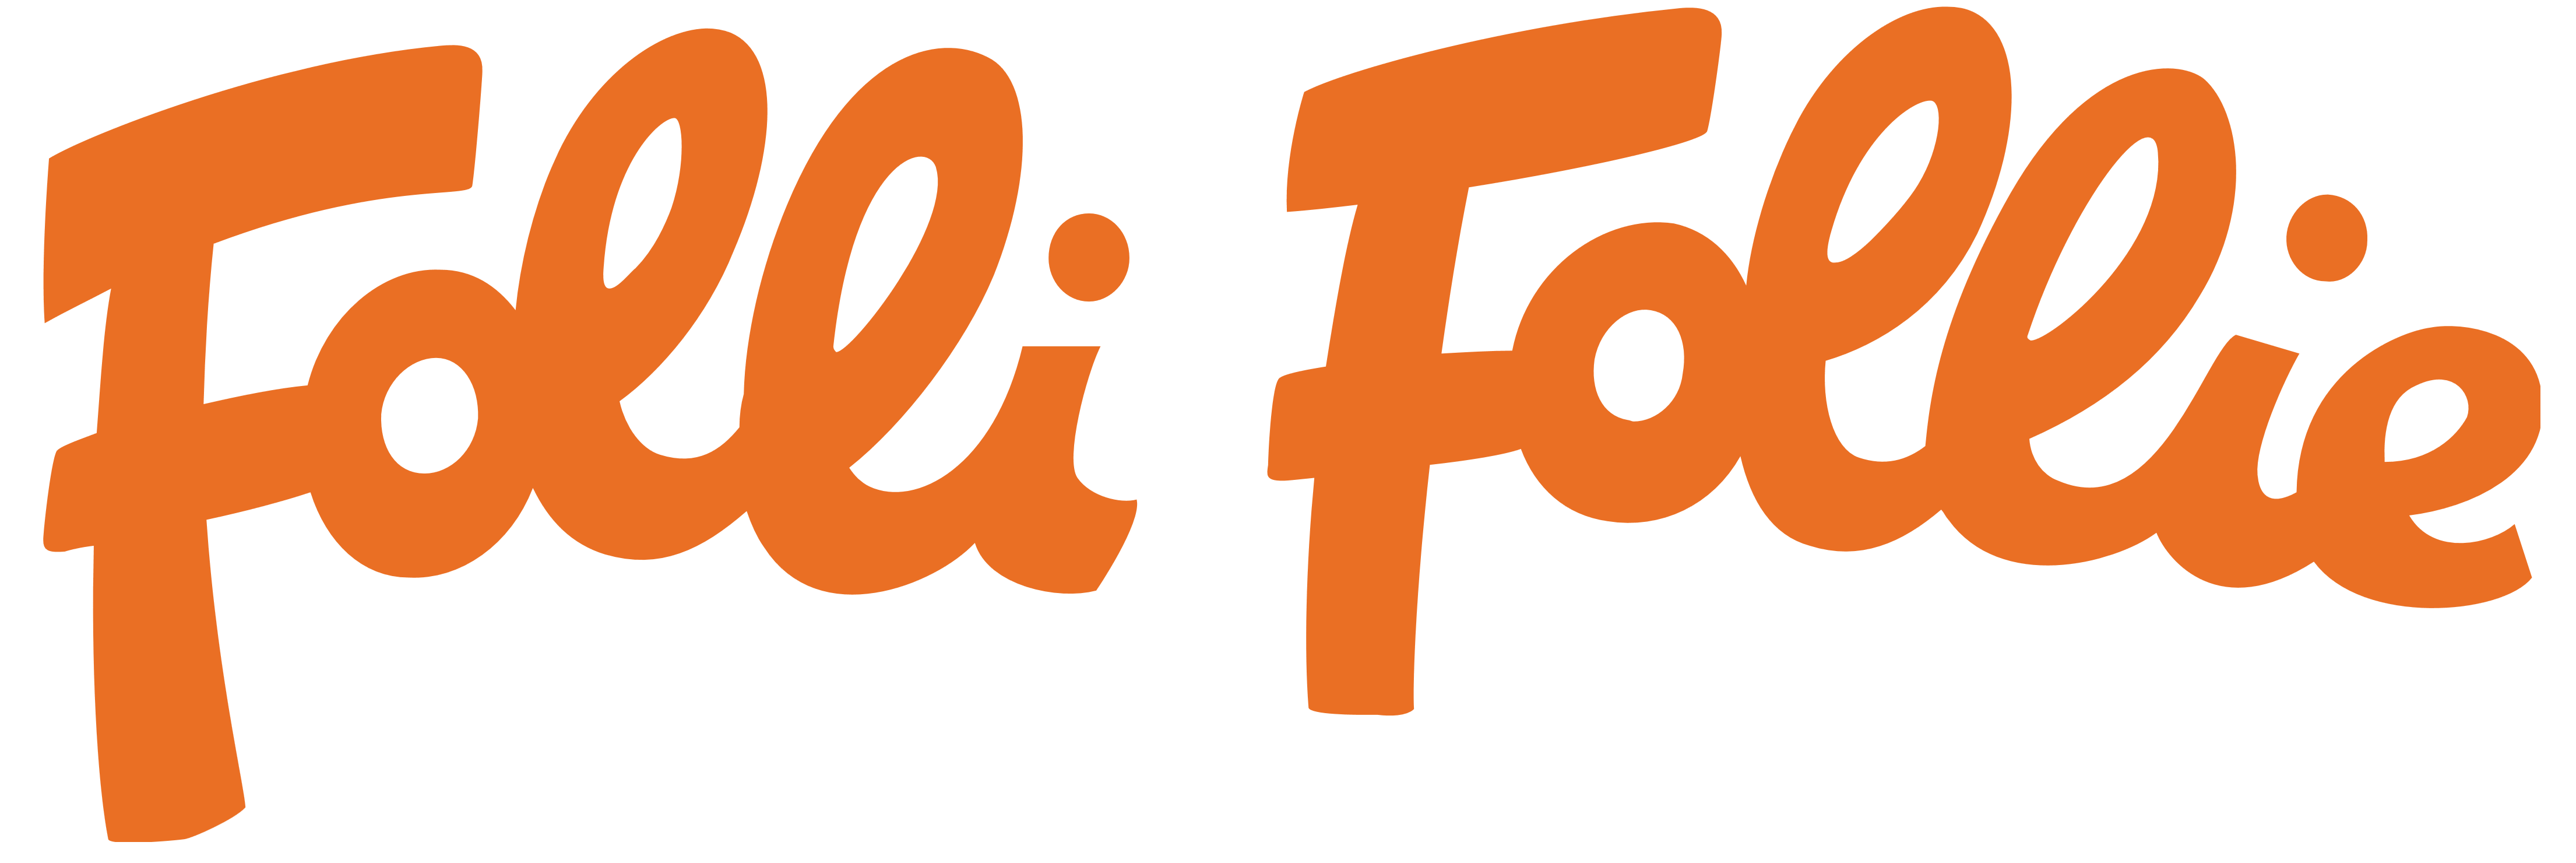 Folli Follie logo, logotype